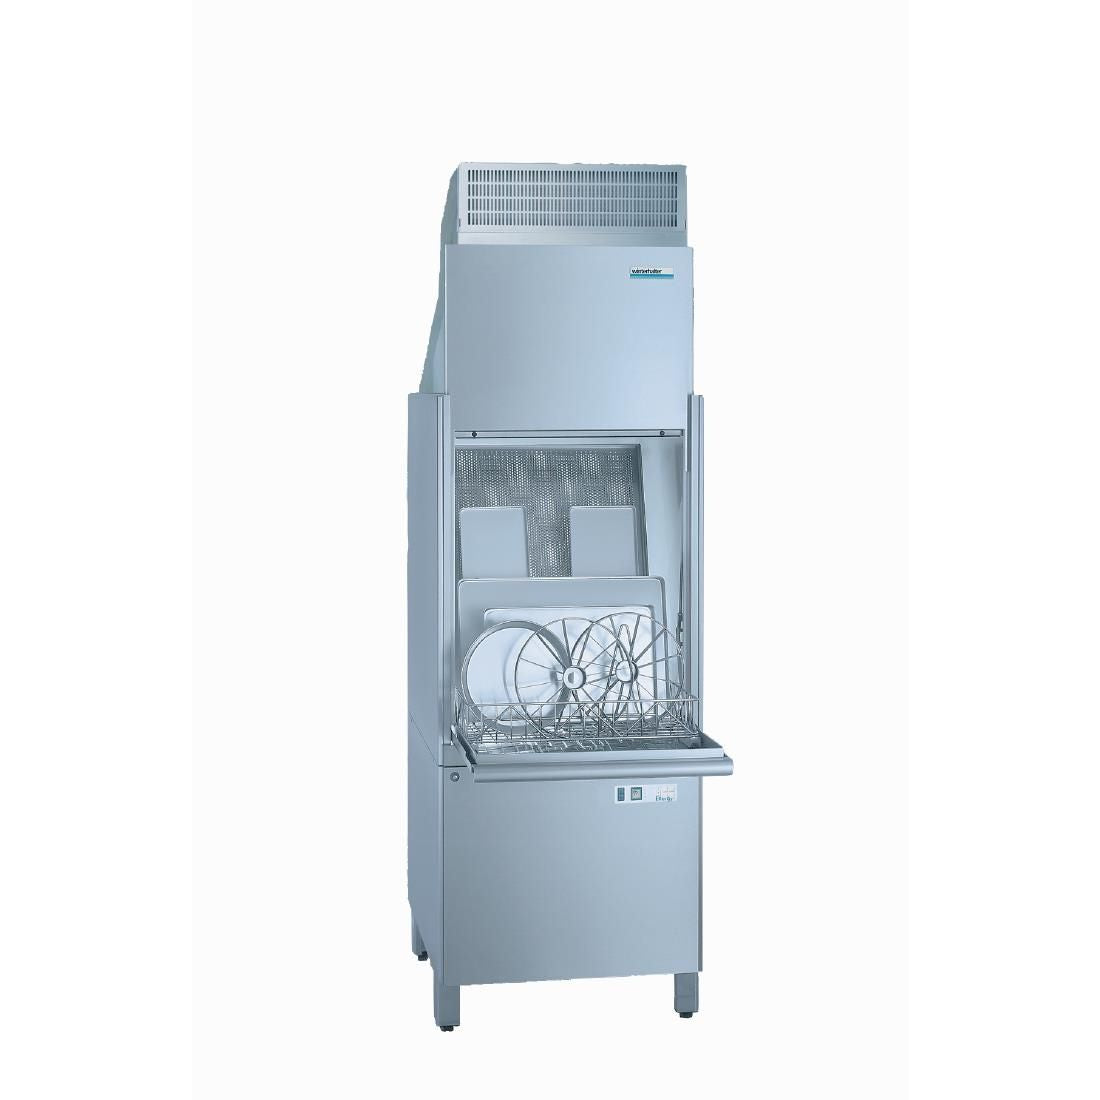 DE676 Winterhalter Utensil Washer UF-L Energy JD Catering Equipment Solutions Ltd